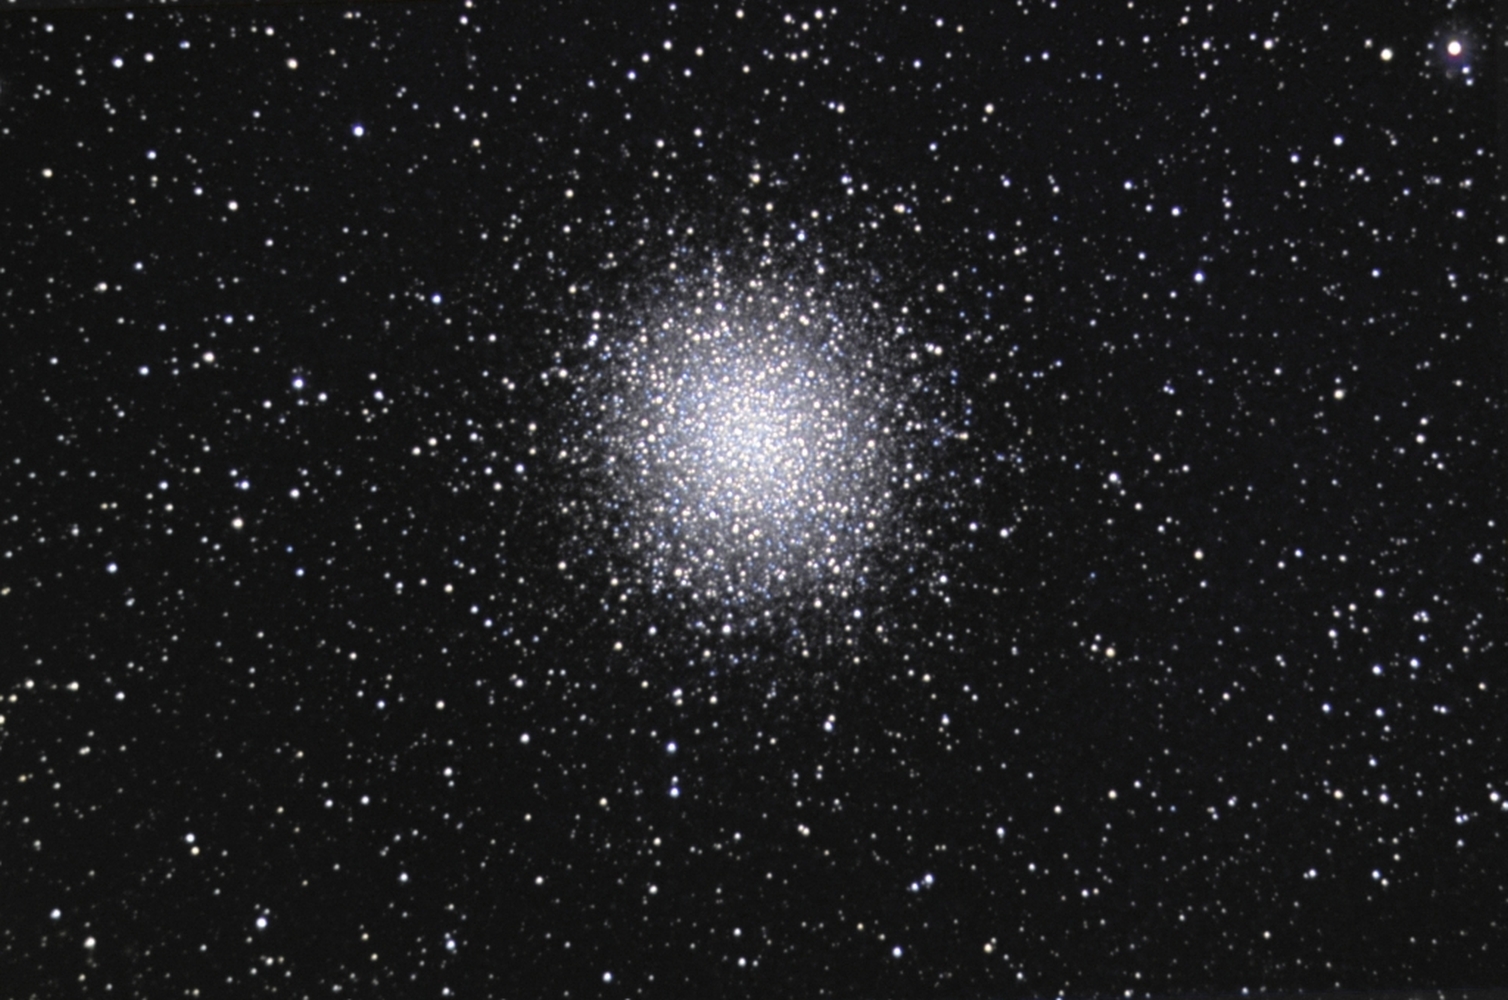 M14 from BMV Observatories